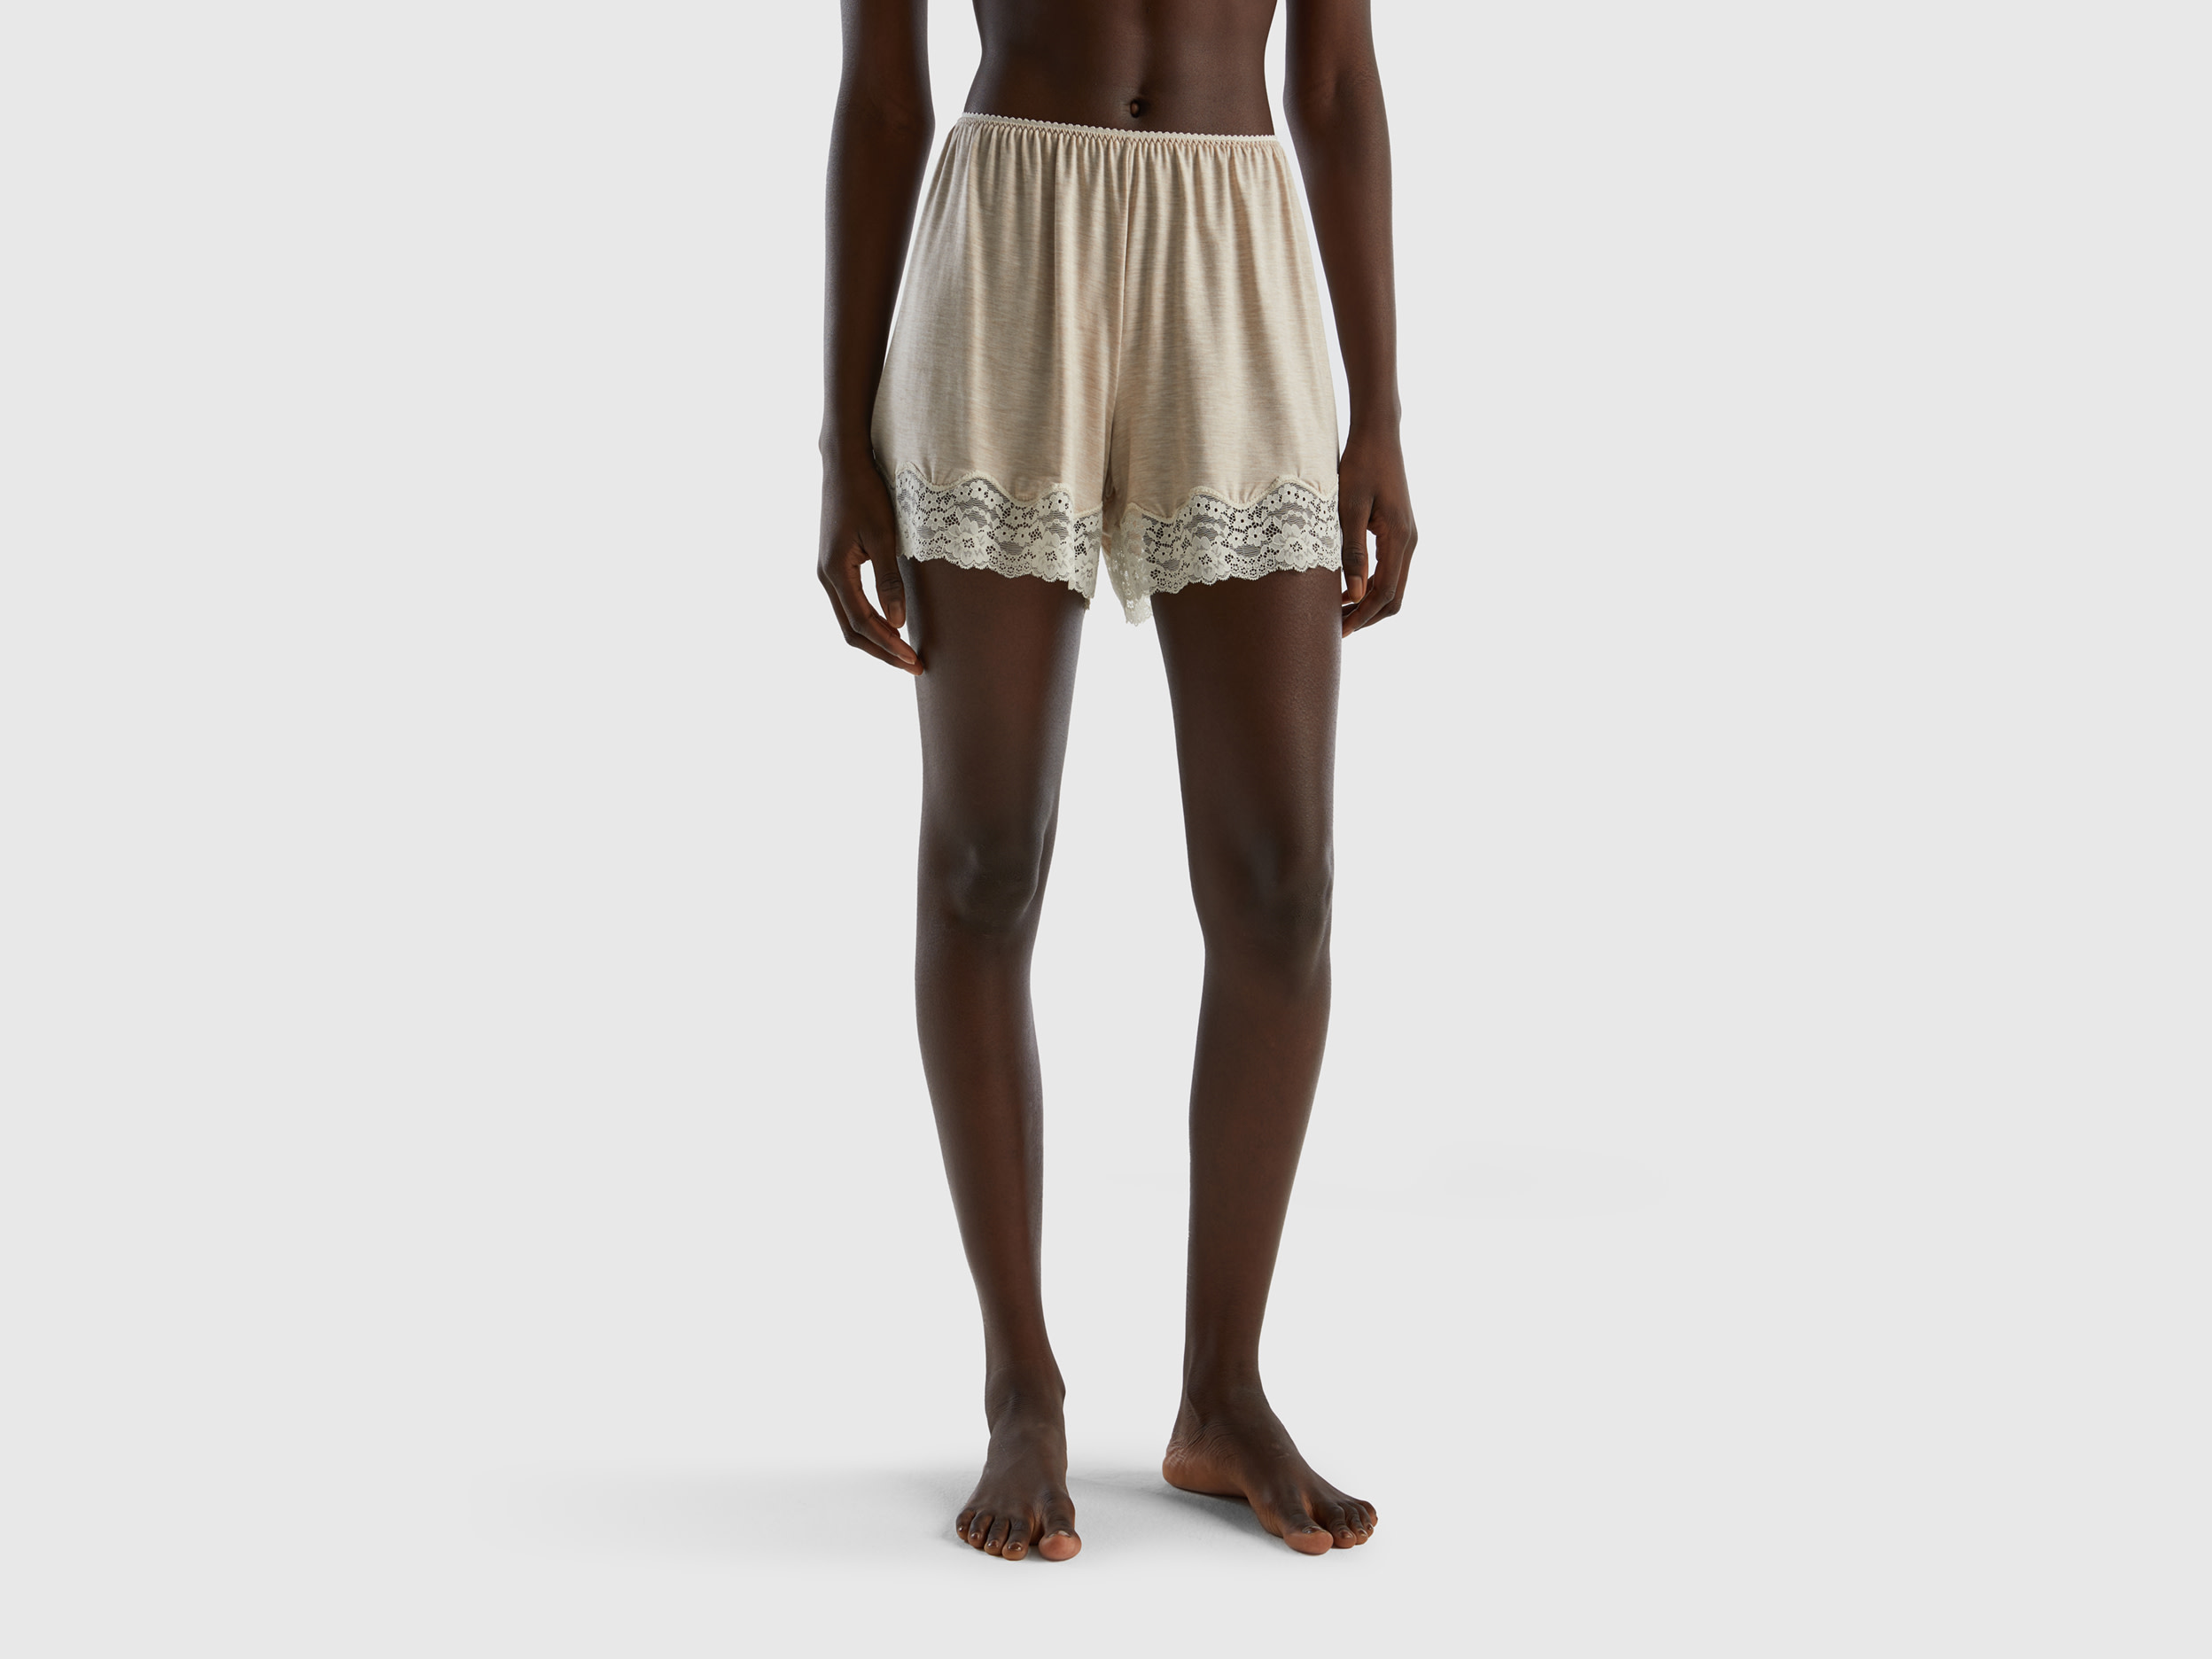 Benetton, Flowy Shorts With Lace, size M, Beige, Women